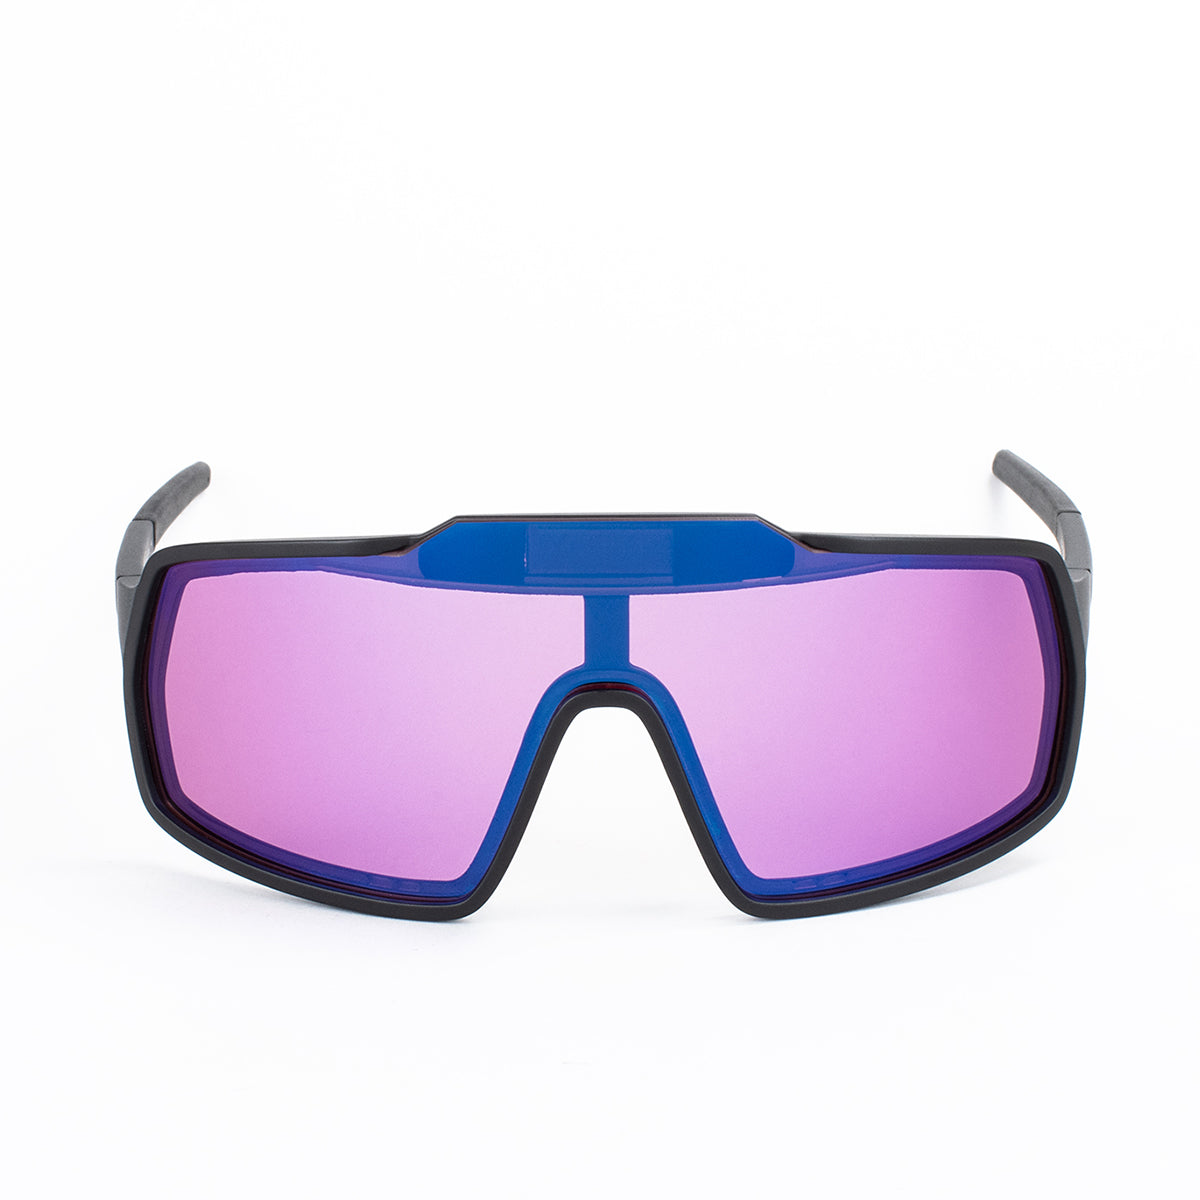 OutOf Electronic Sunglasses Bot 2Irid Blue